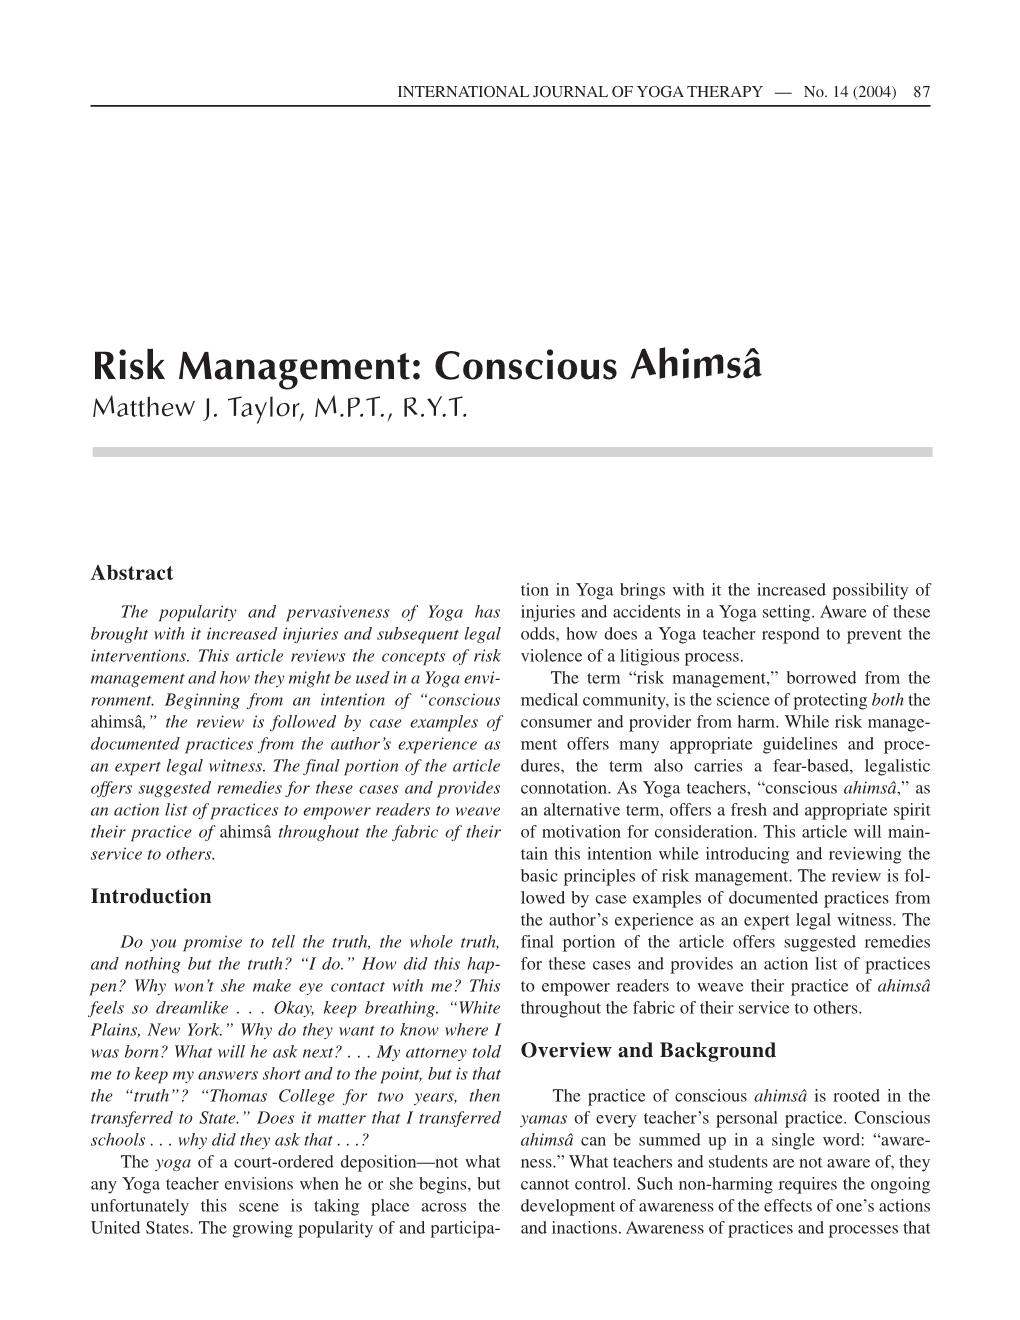 Risk Management: Conscious Ahimsâ Matthew J